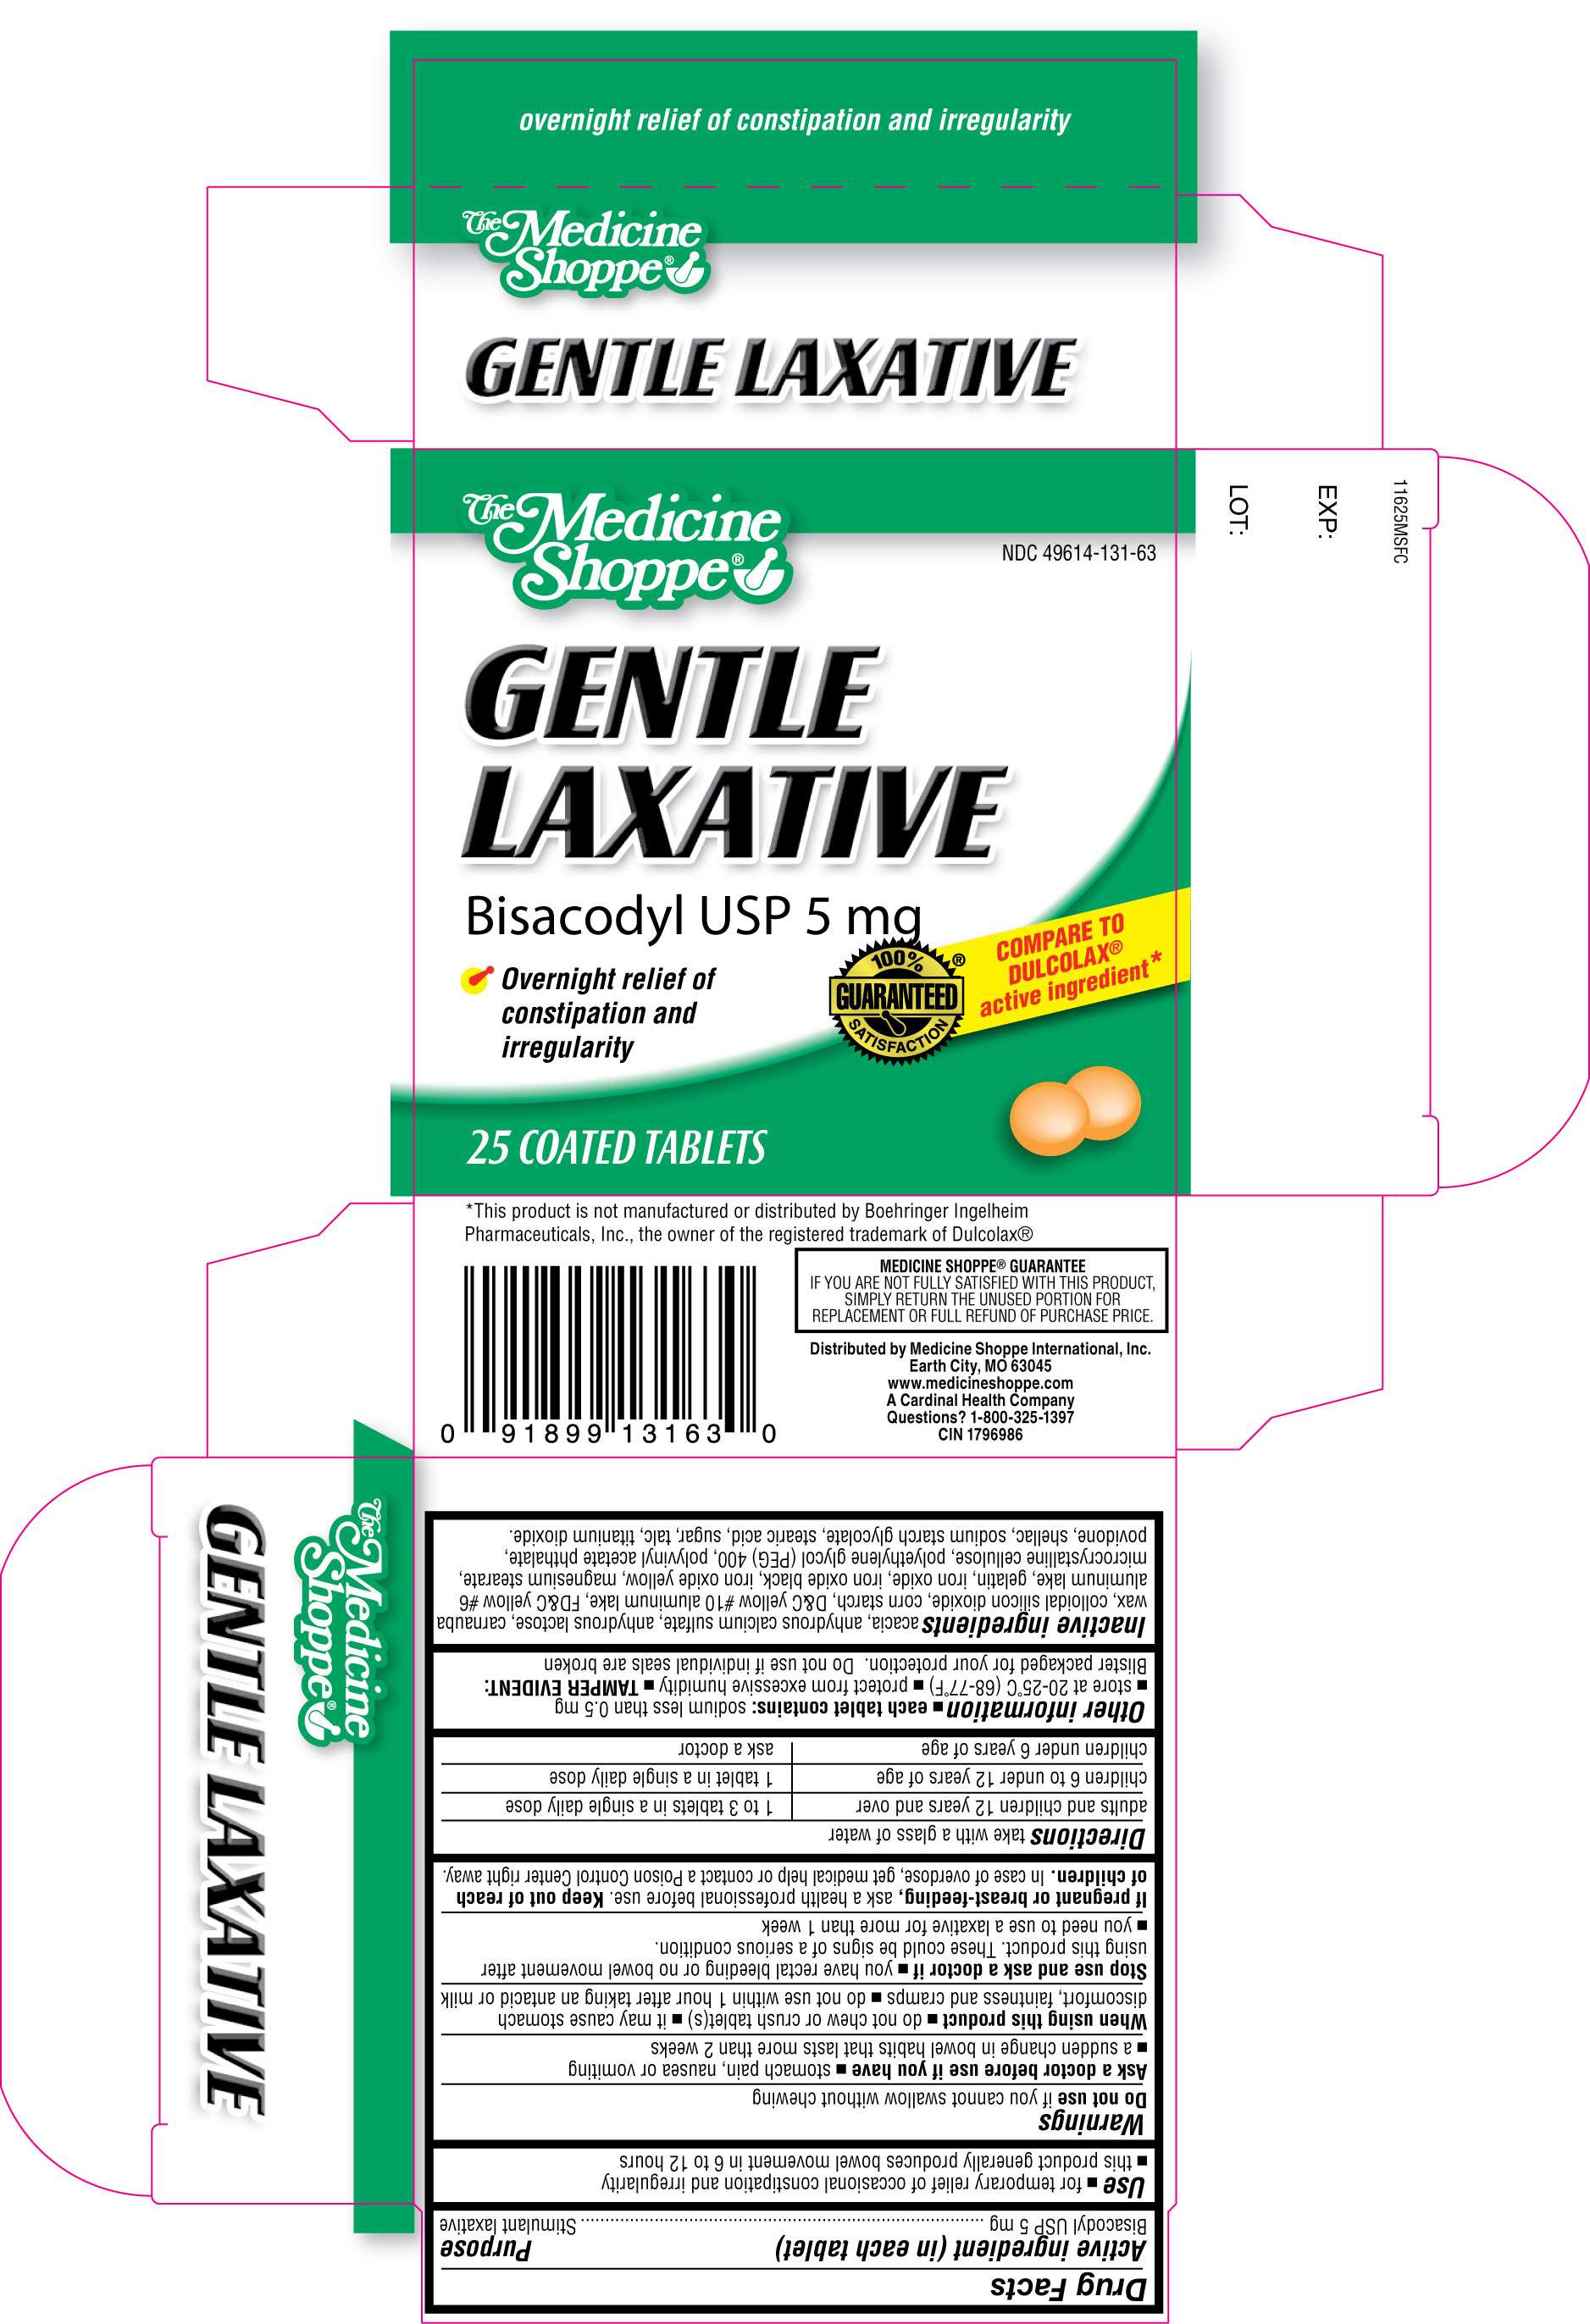 The Medicine Shoppe Gentle Laxative